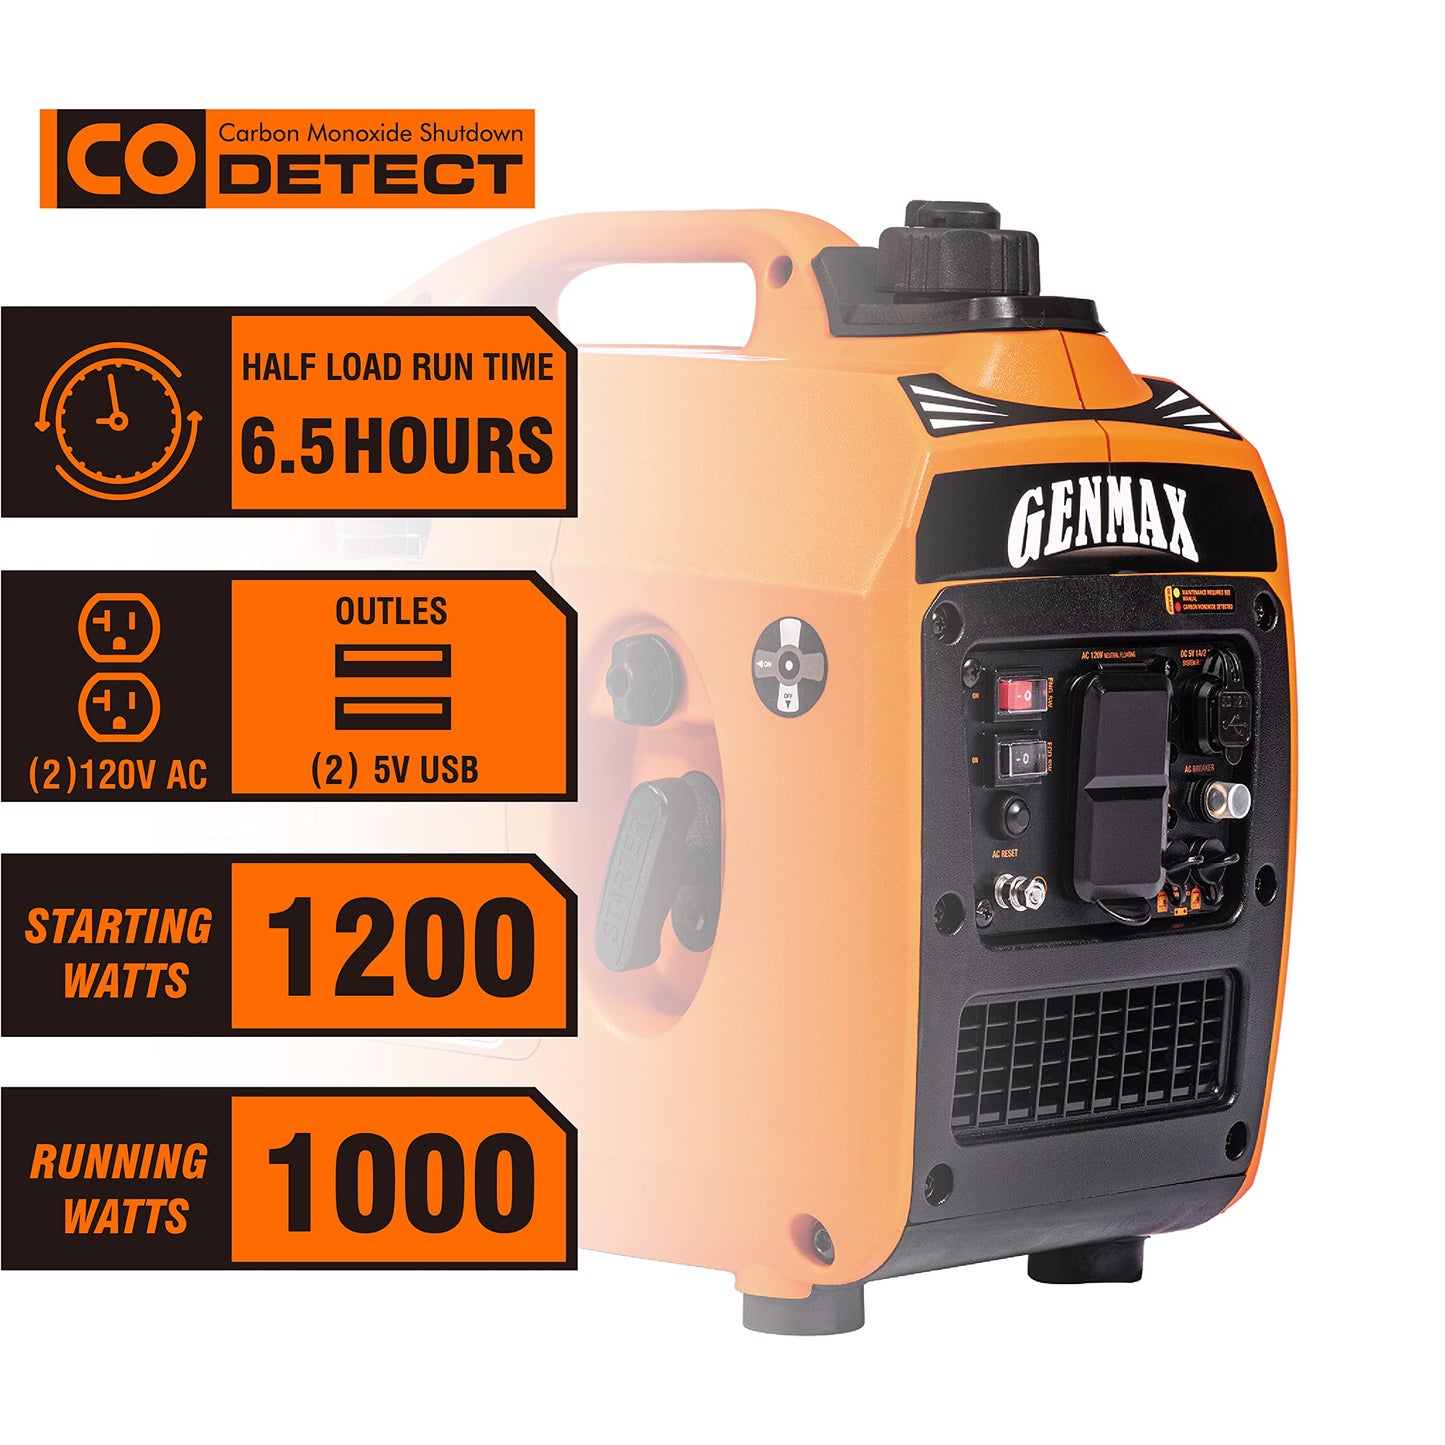 GENMAX GM1200i Portable Inverter Generator with 1200W Qltra-Quiet Gas Engine